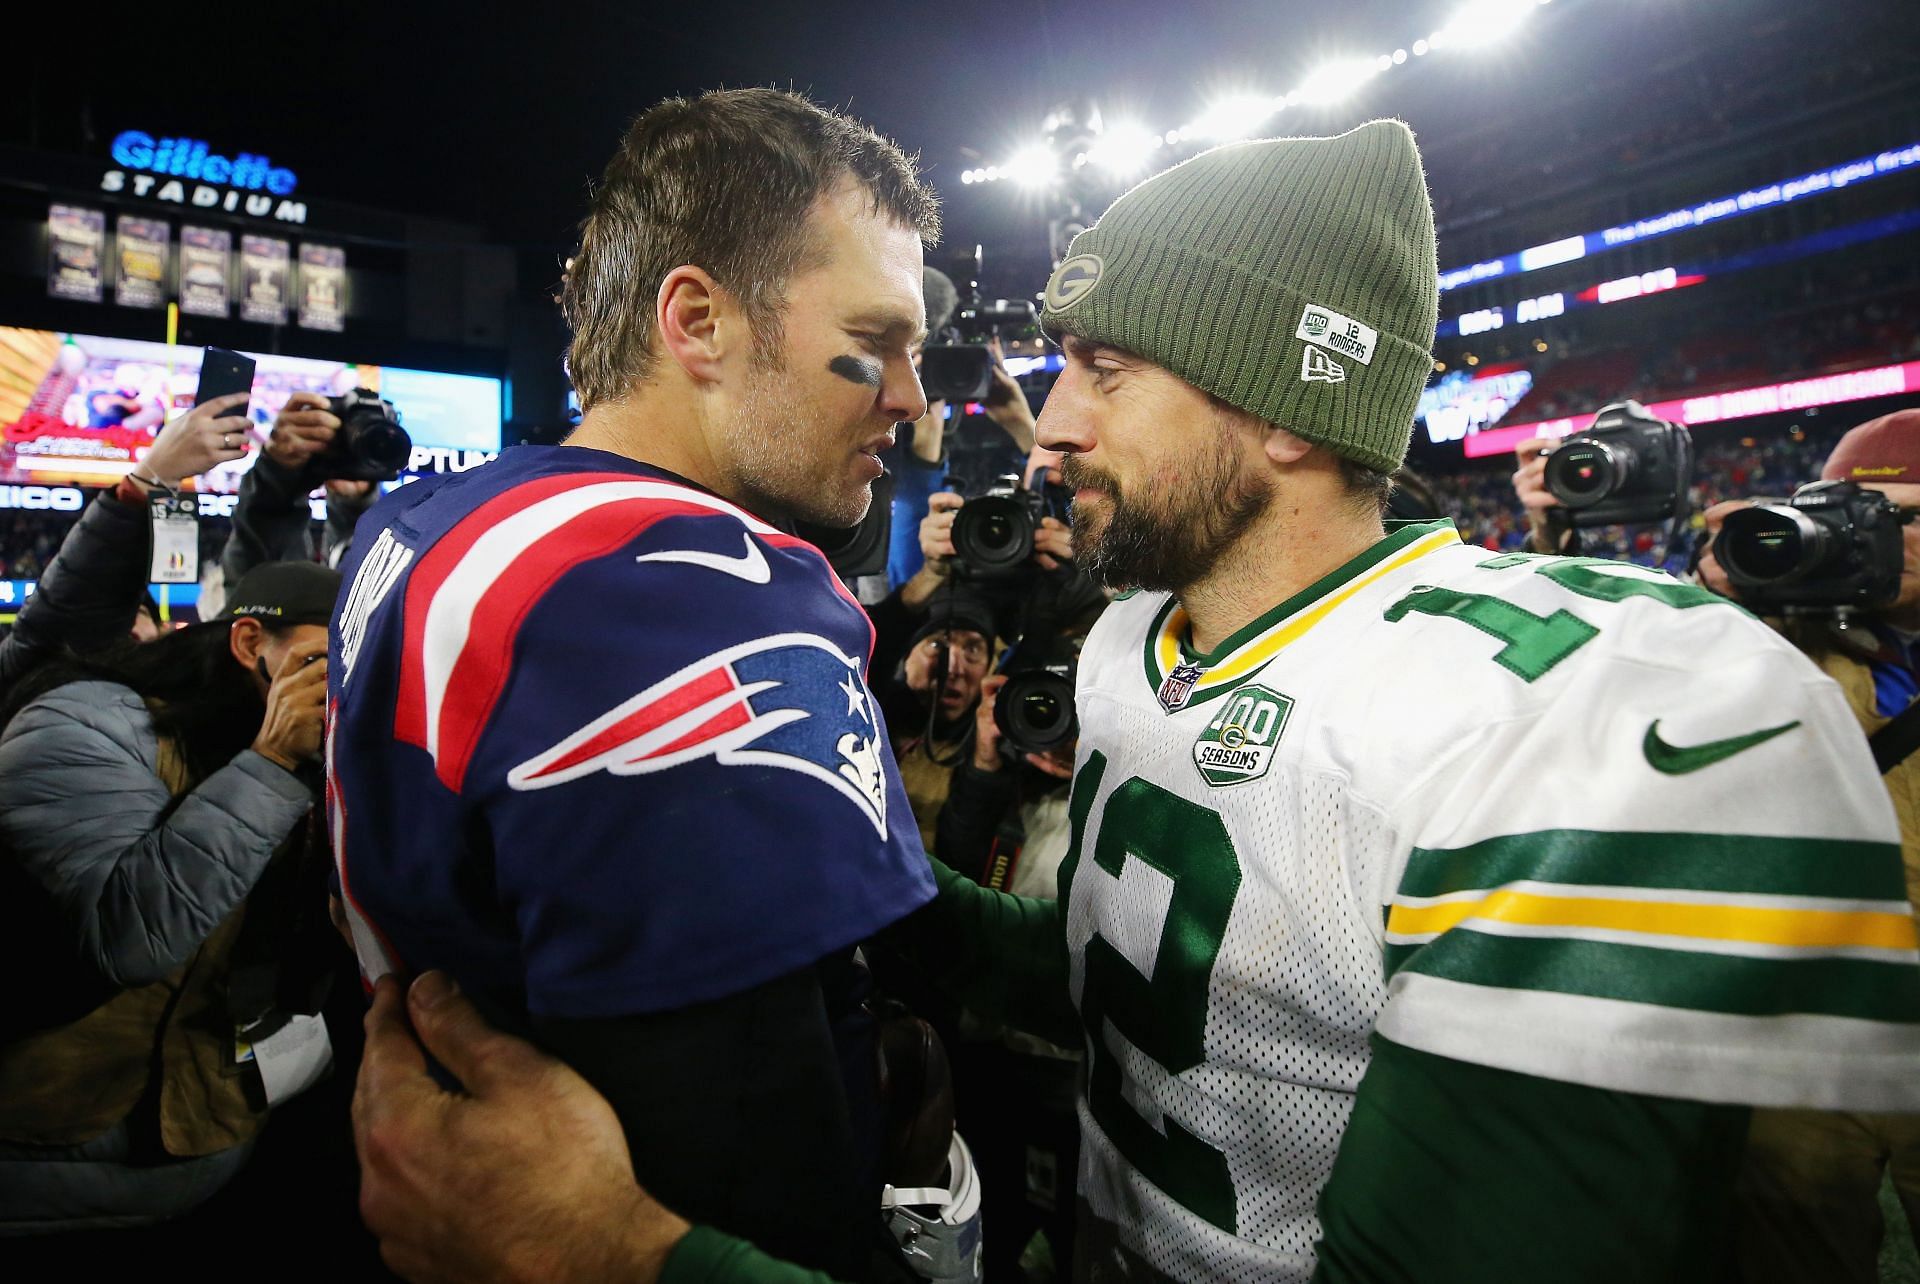 Green Bay Packers quarterback Aaron Rodgers and former New England Patriots quarterback Tom Brady